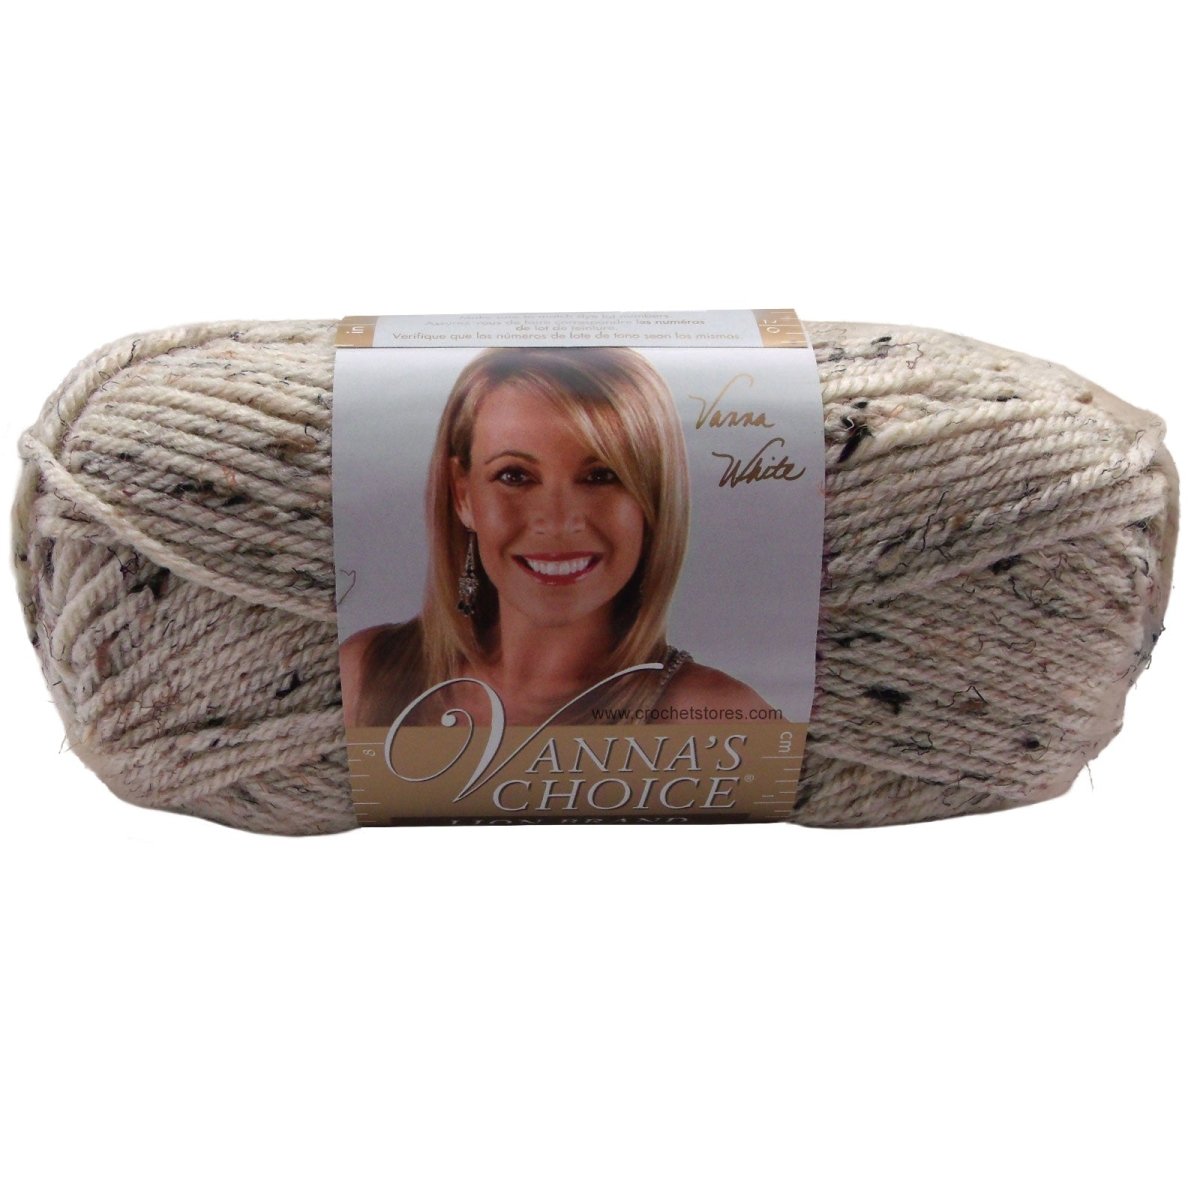 VANNAS CHOICE - Crochetstores860-400